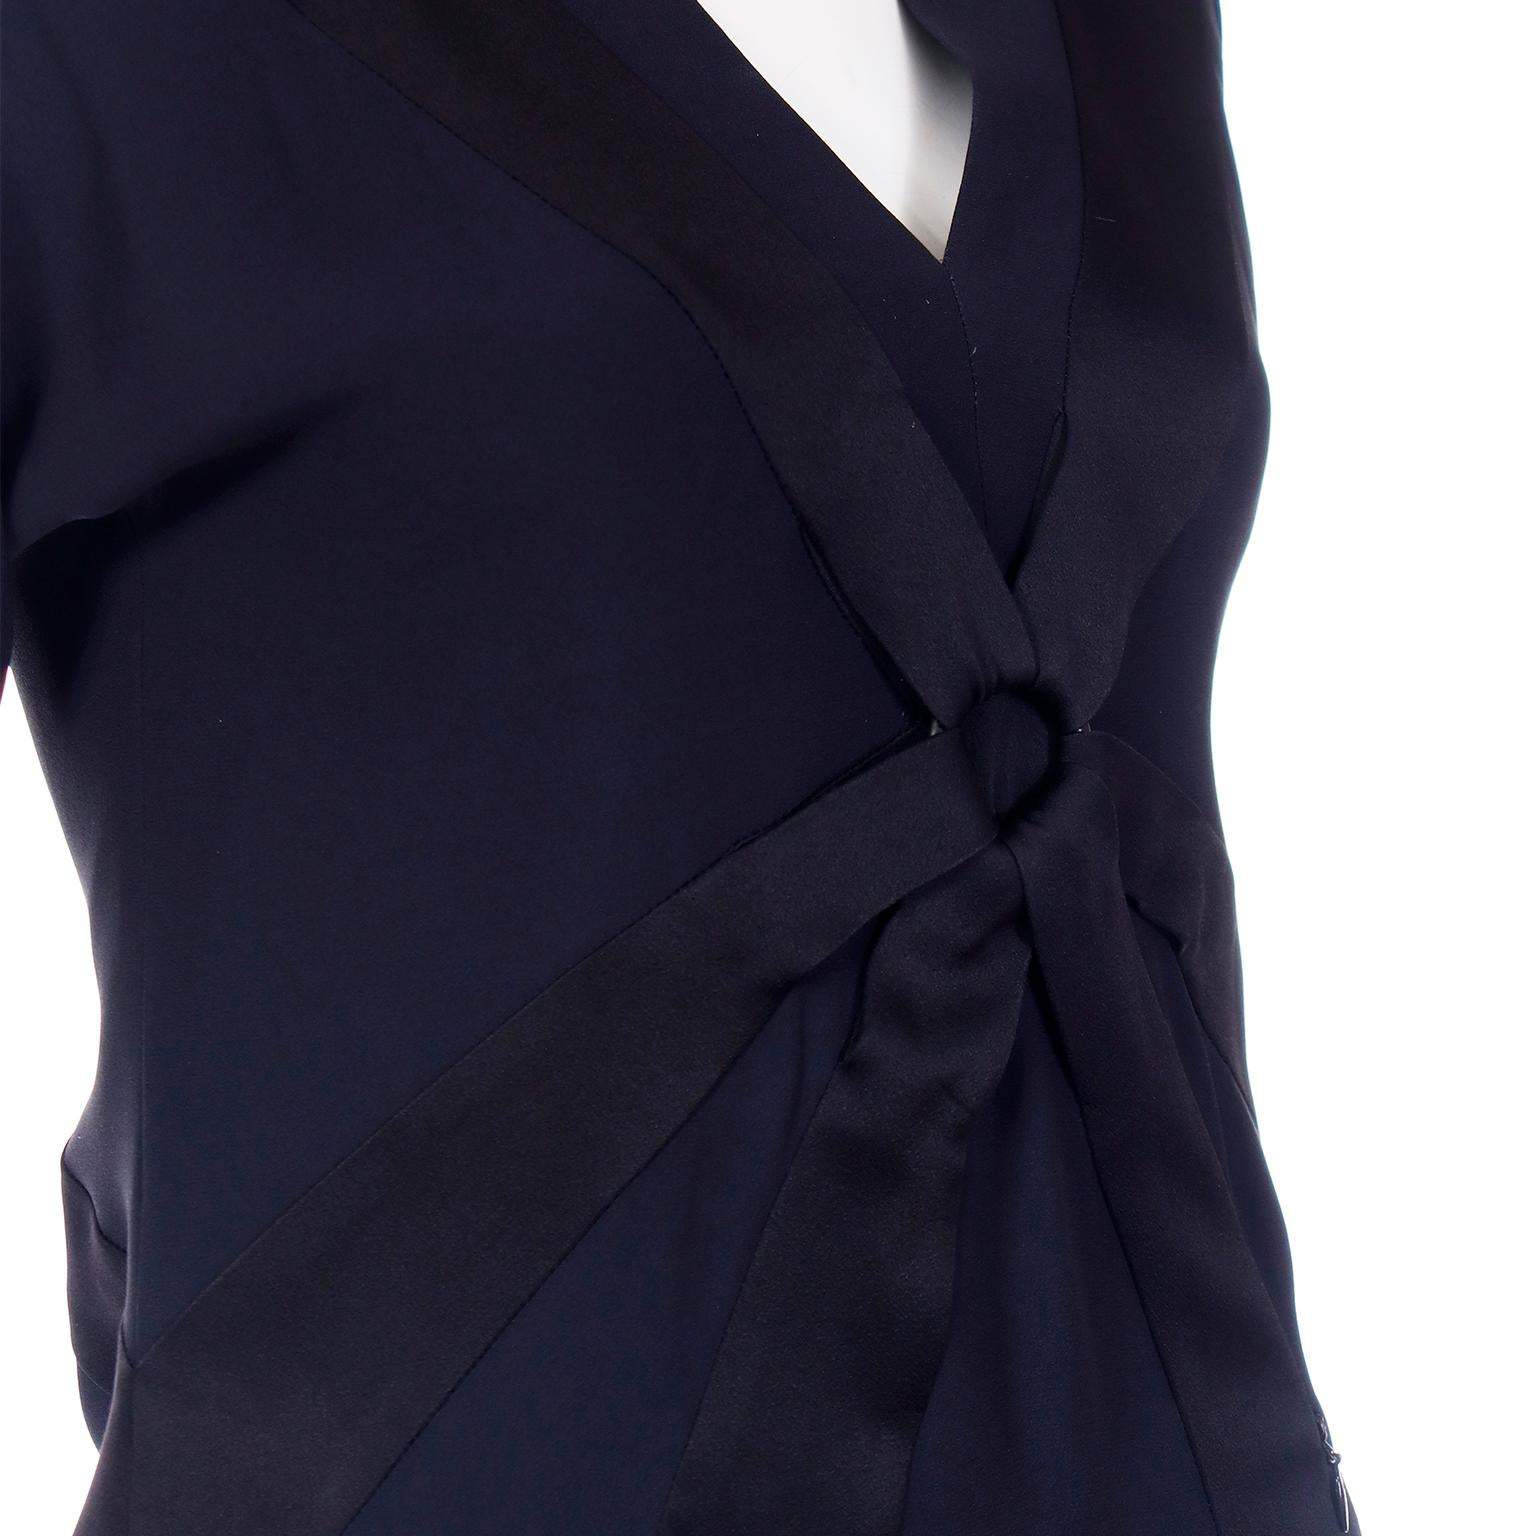 Vintage Jean Paul Gaultier Bondage Inspired Blue and Black Dress For ...